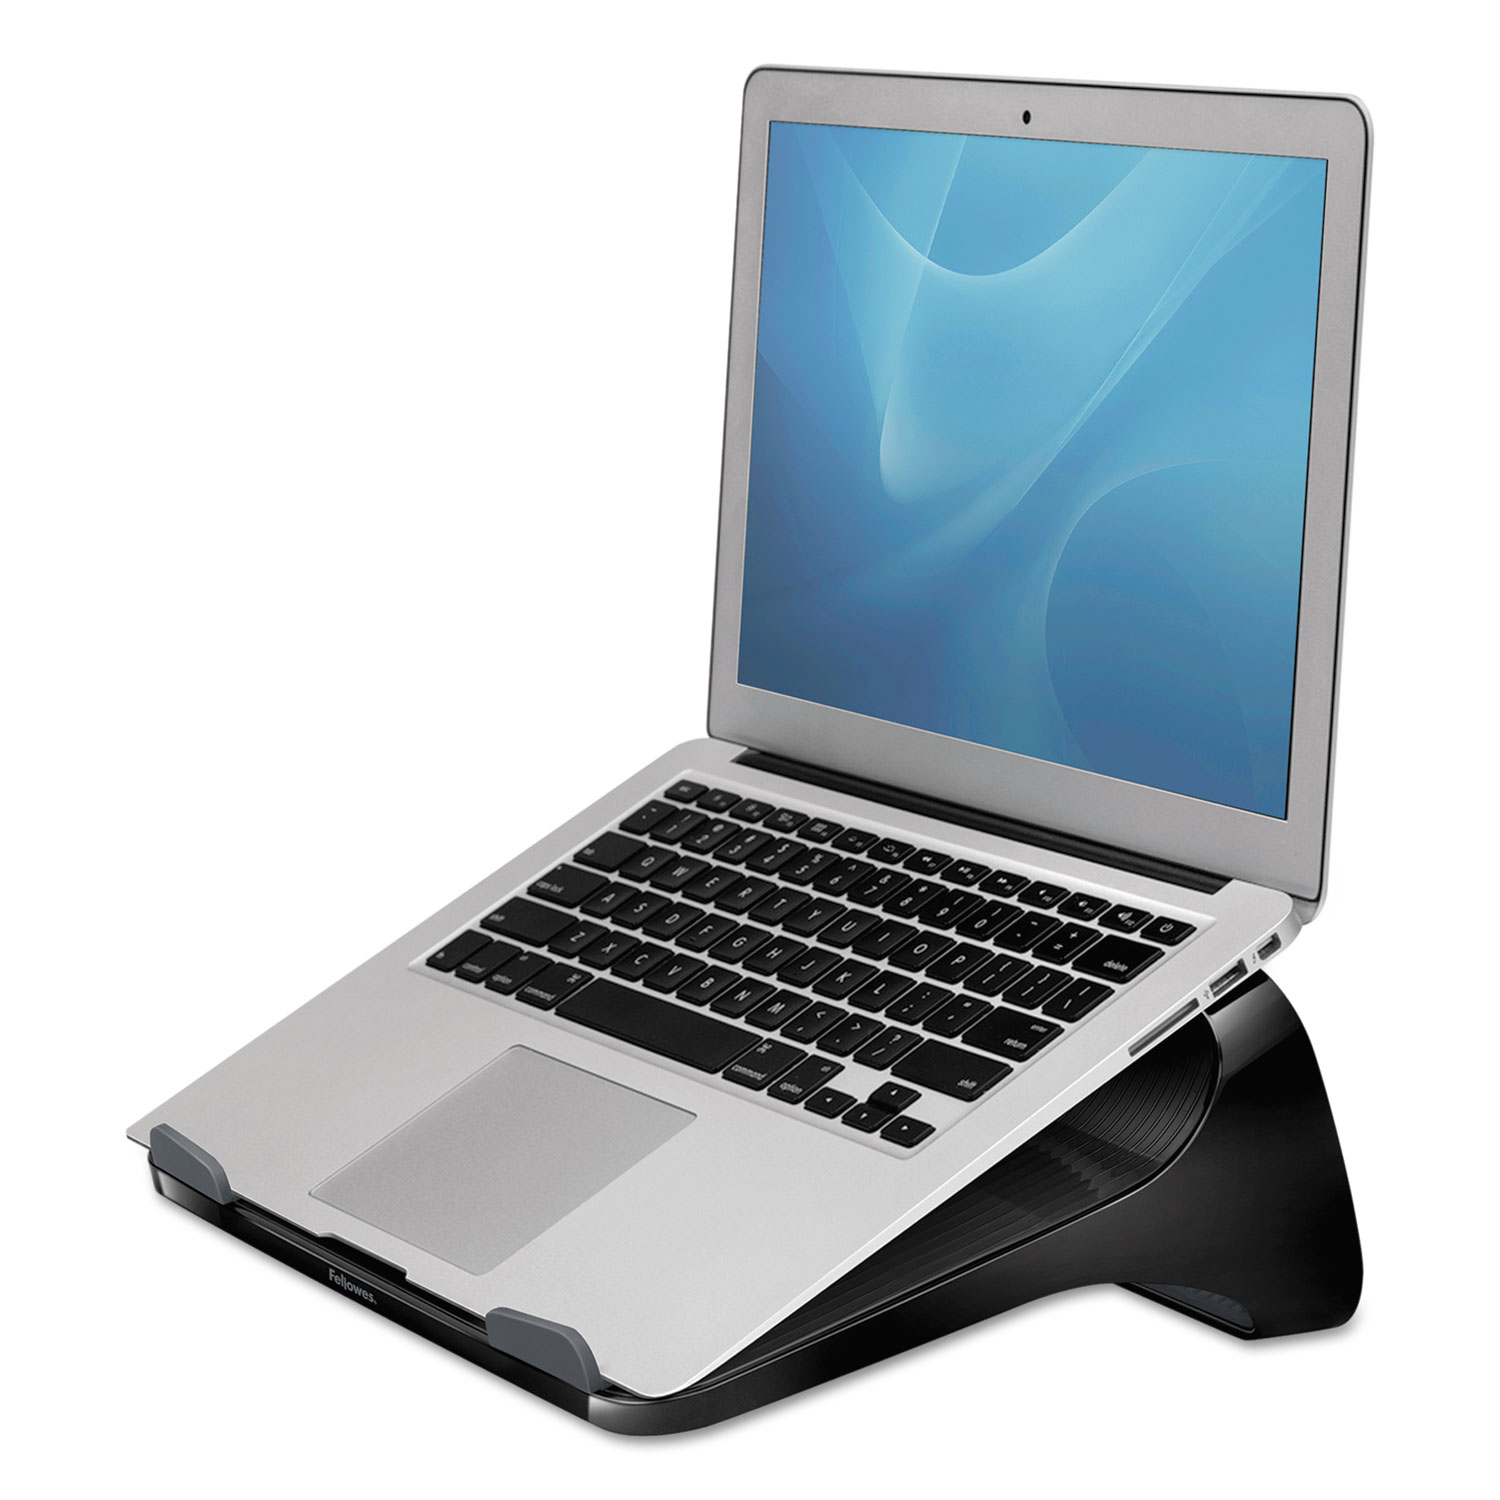  Fellowes 9472401 Laptop Riser, 13 3/16 x 9 5/16 x 4 1/8, Black/Gray (FEL9472401) 